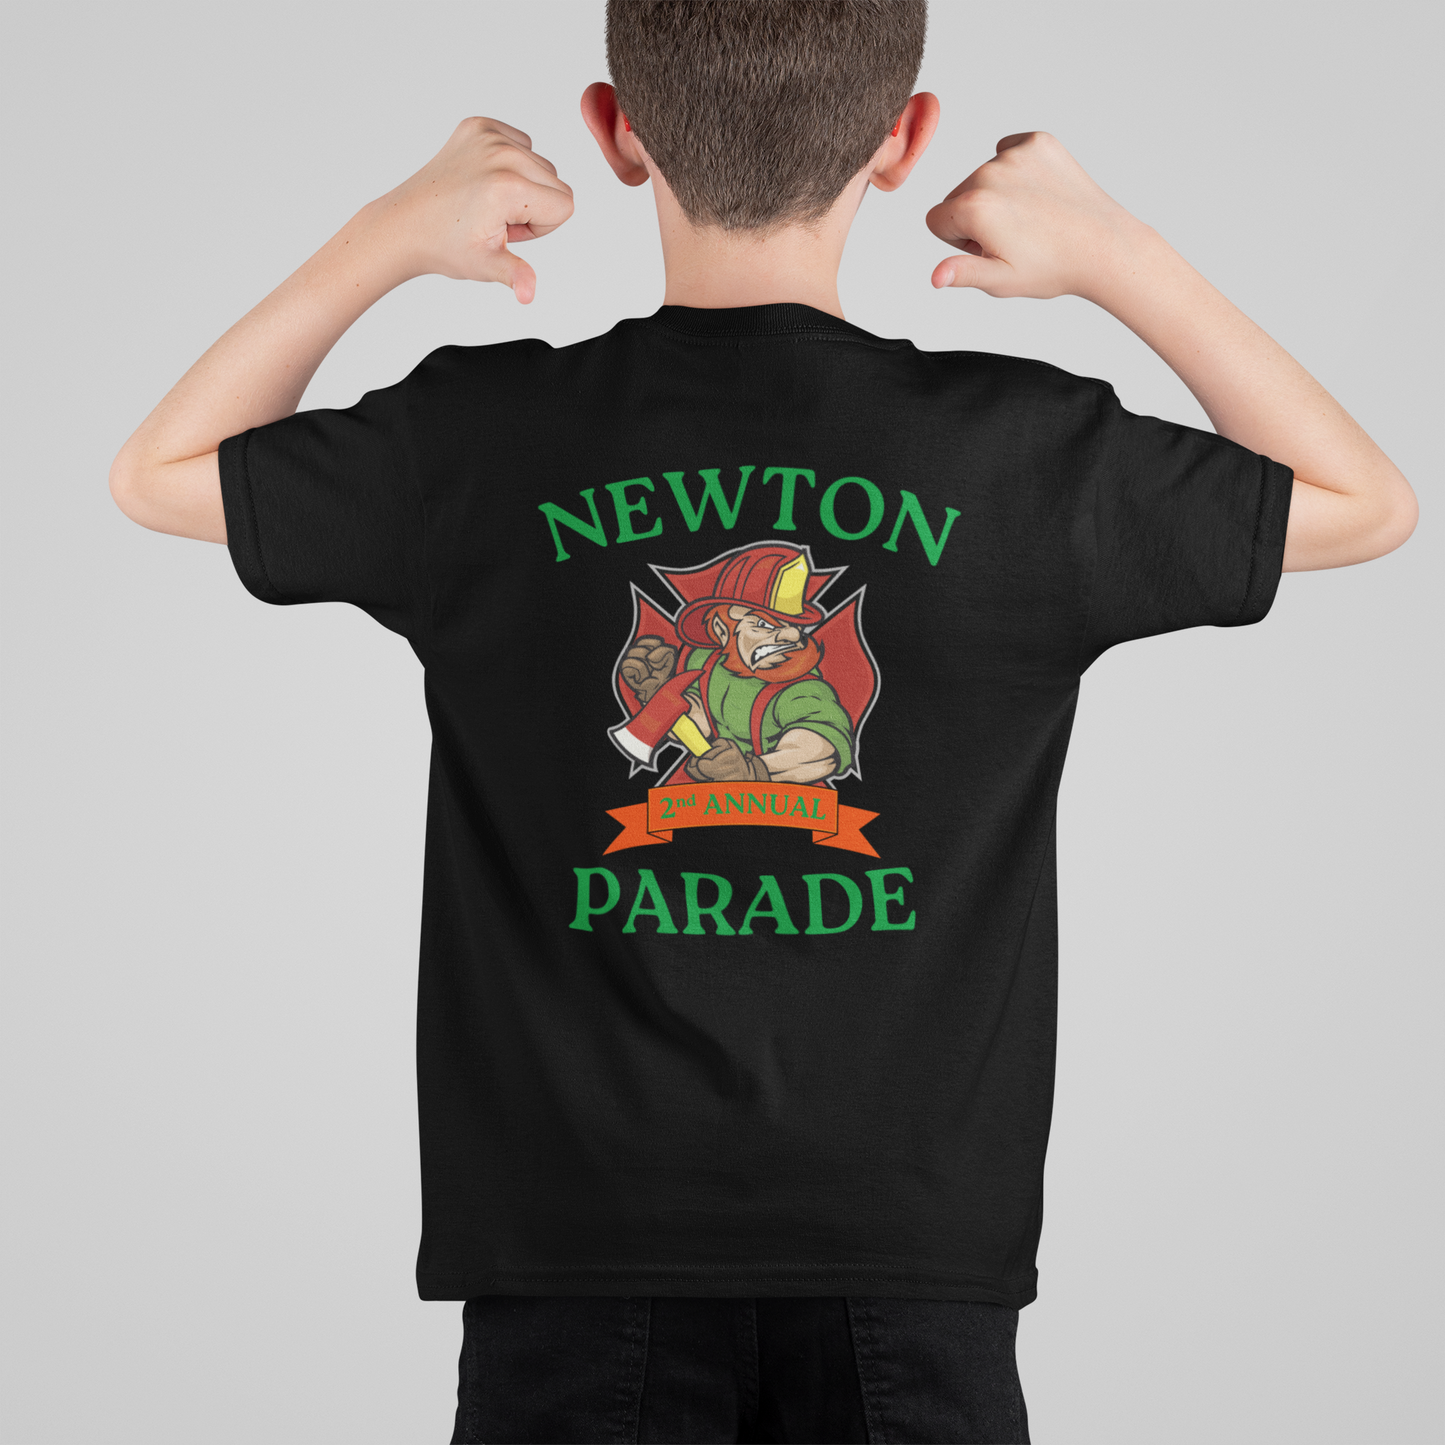 [NEW] Parade Youth T-Shirt - 2024 Newton Parade